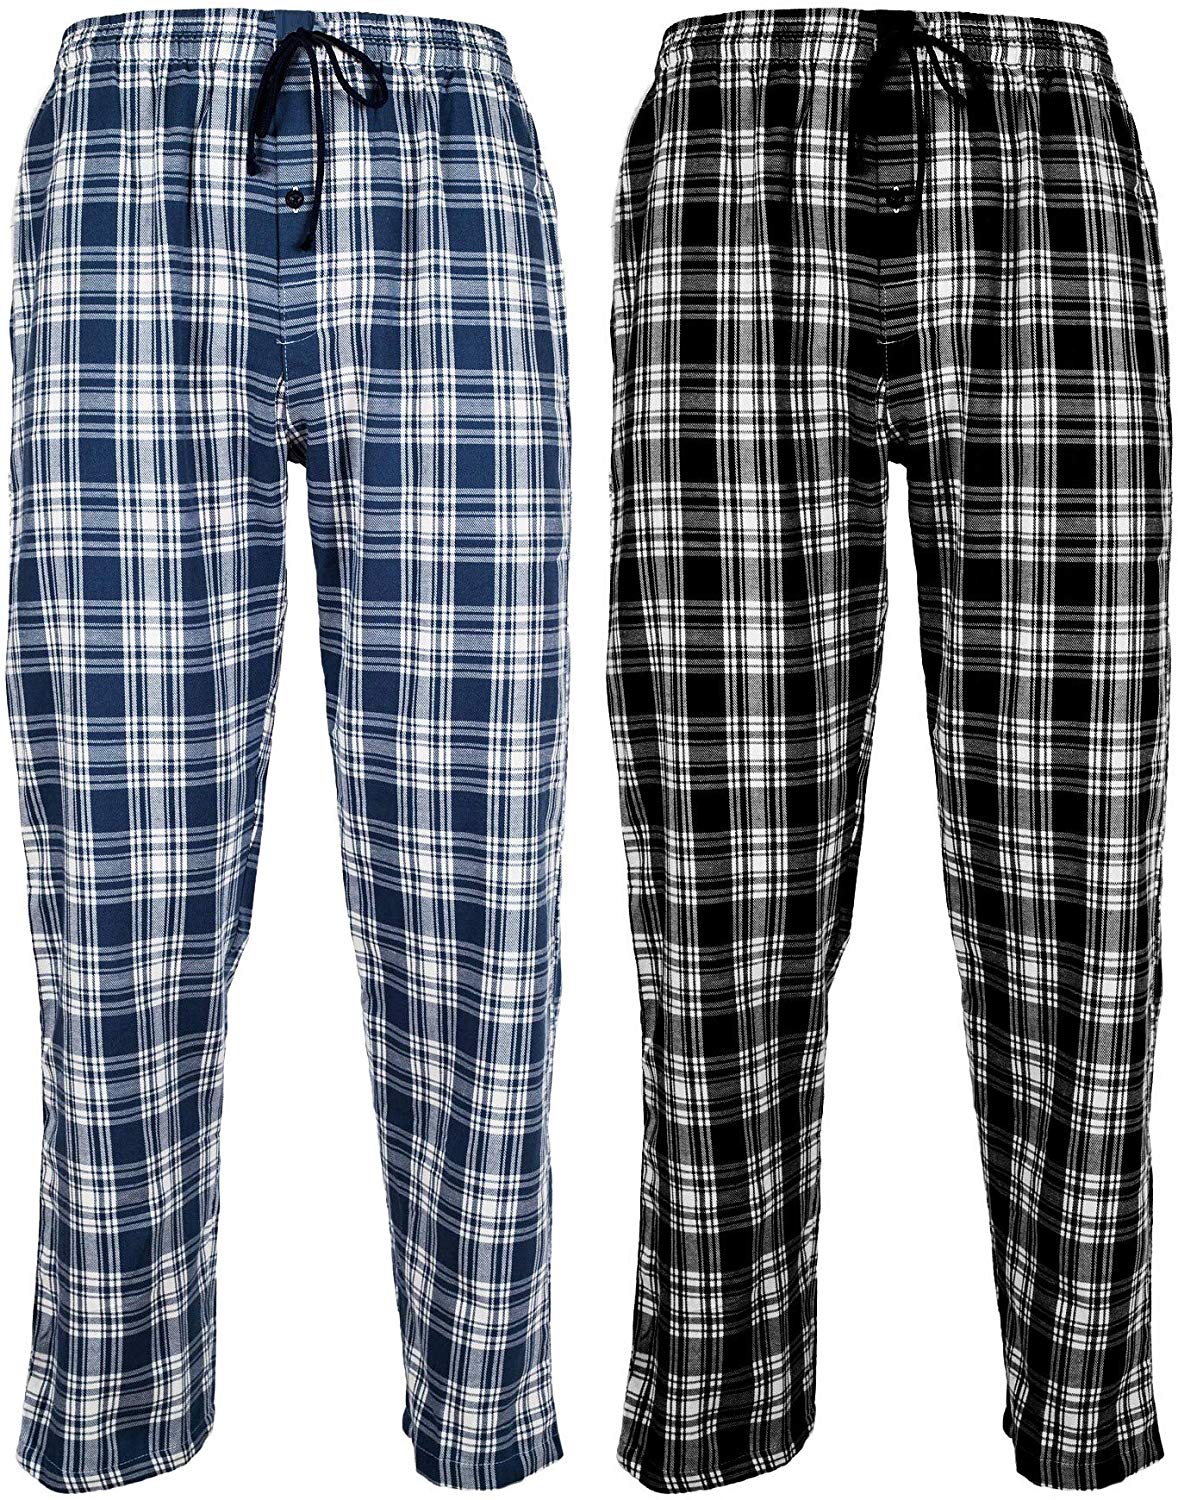 Andrew Scott Mens 3 Pack Light Weight Cotton Flannel Soft Fleece Brush Woven Pajama/Lounge Sleep Shorts 